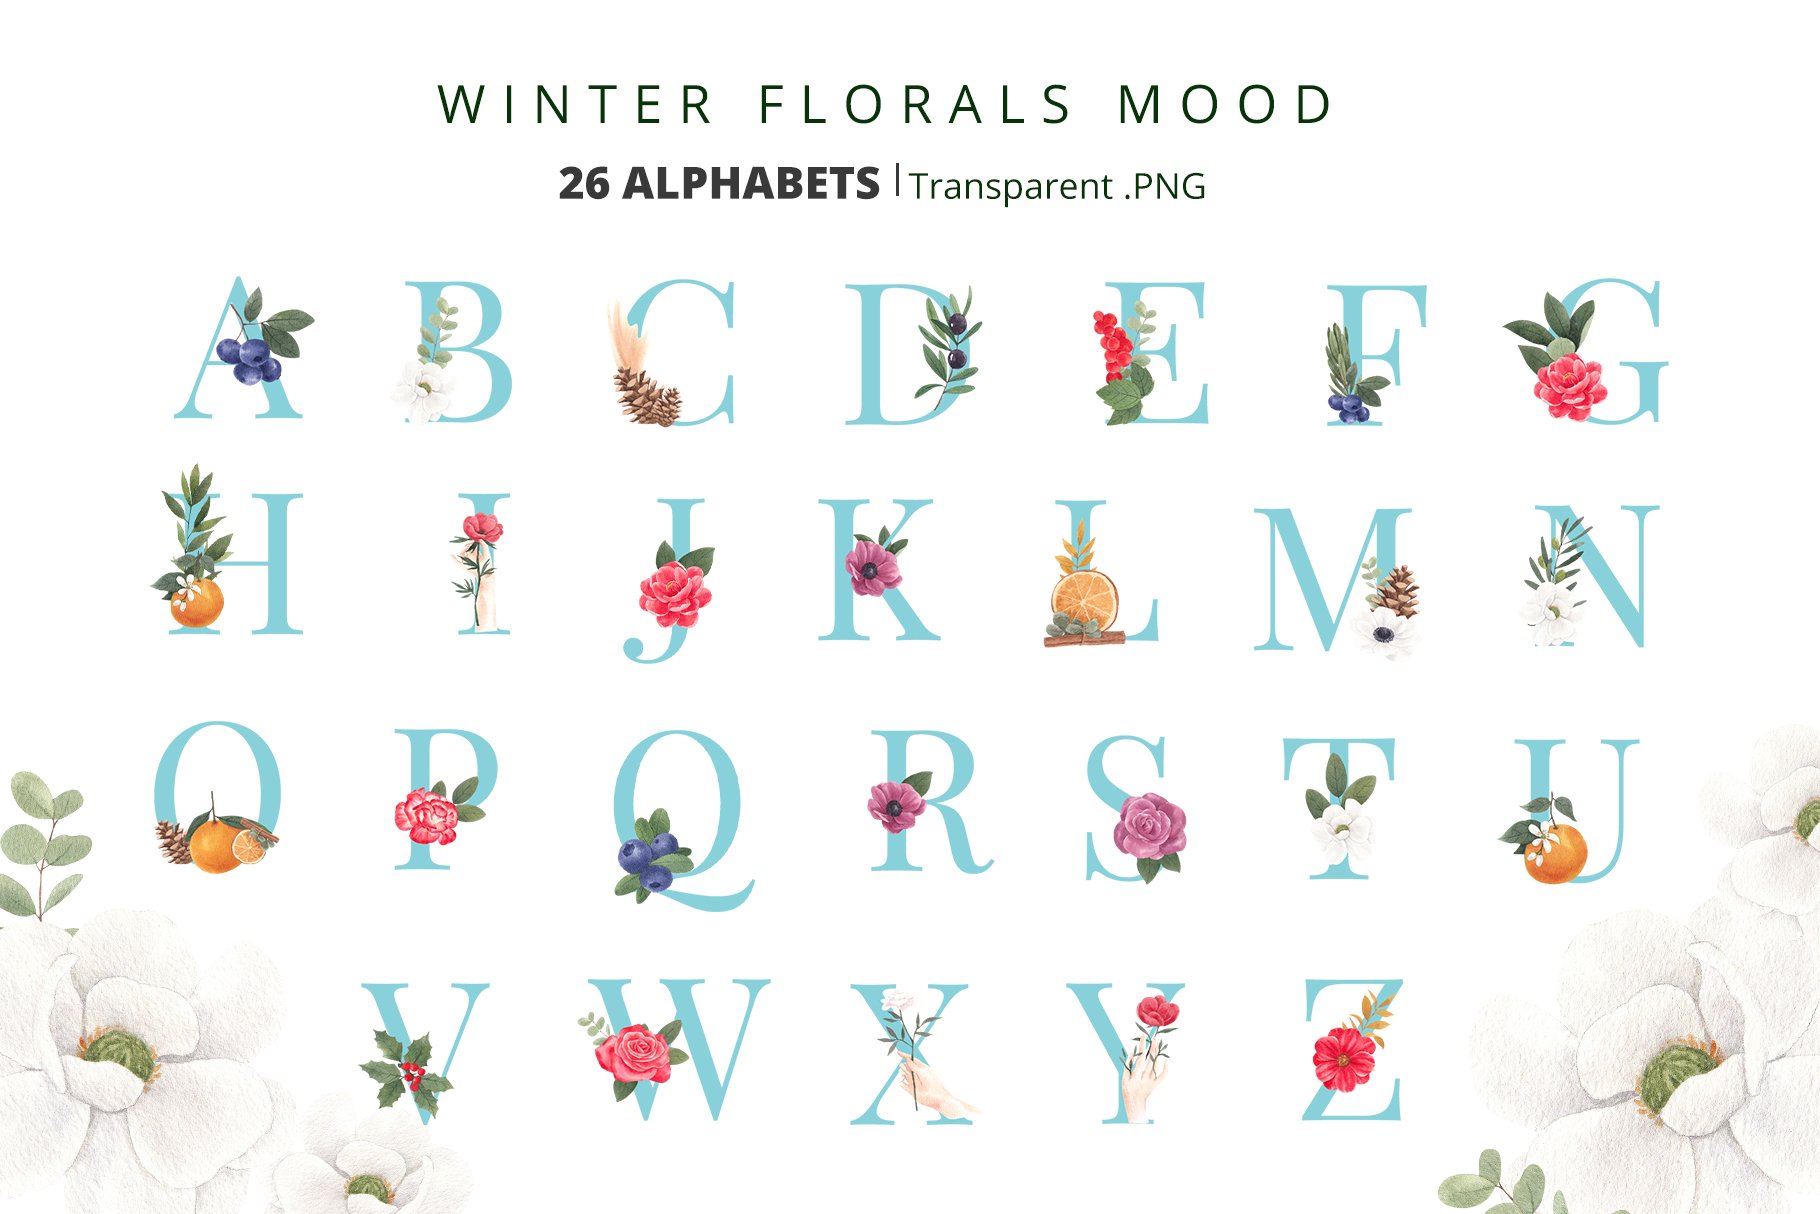 Winter florals mood alphabet.